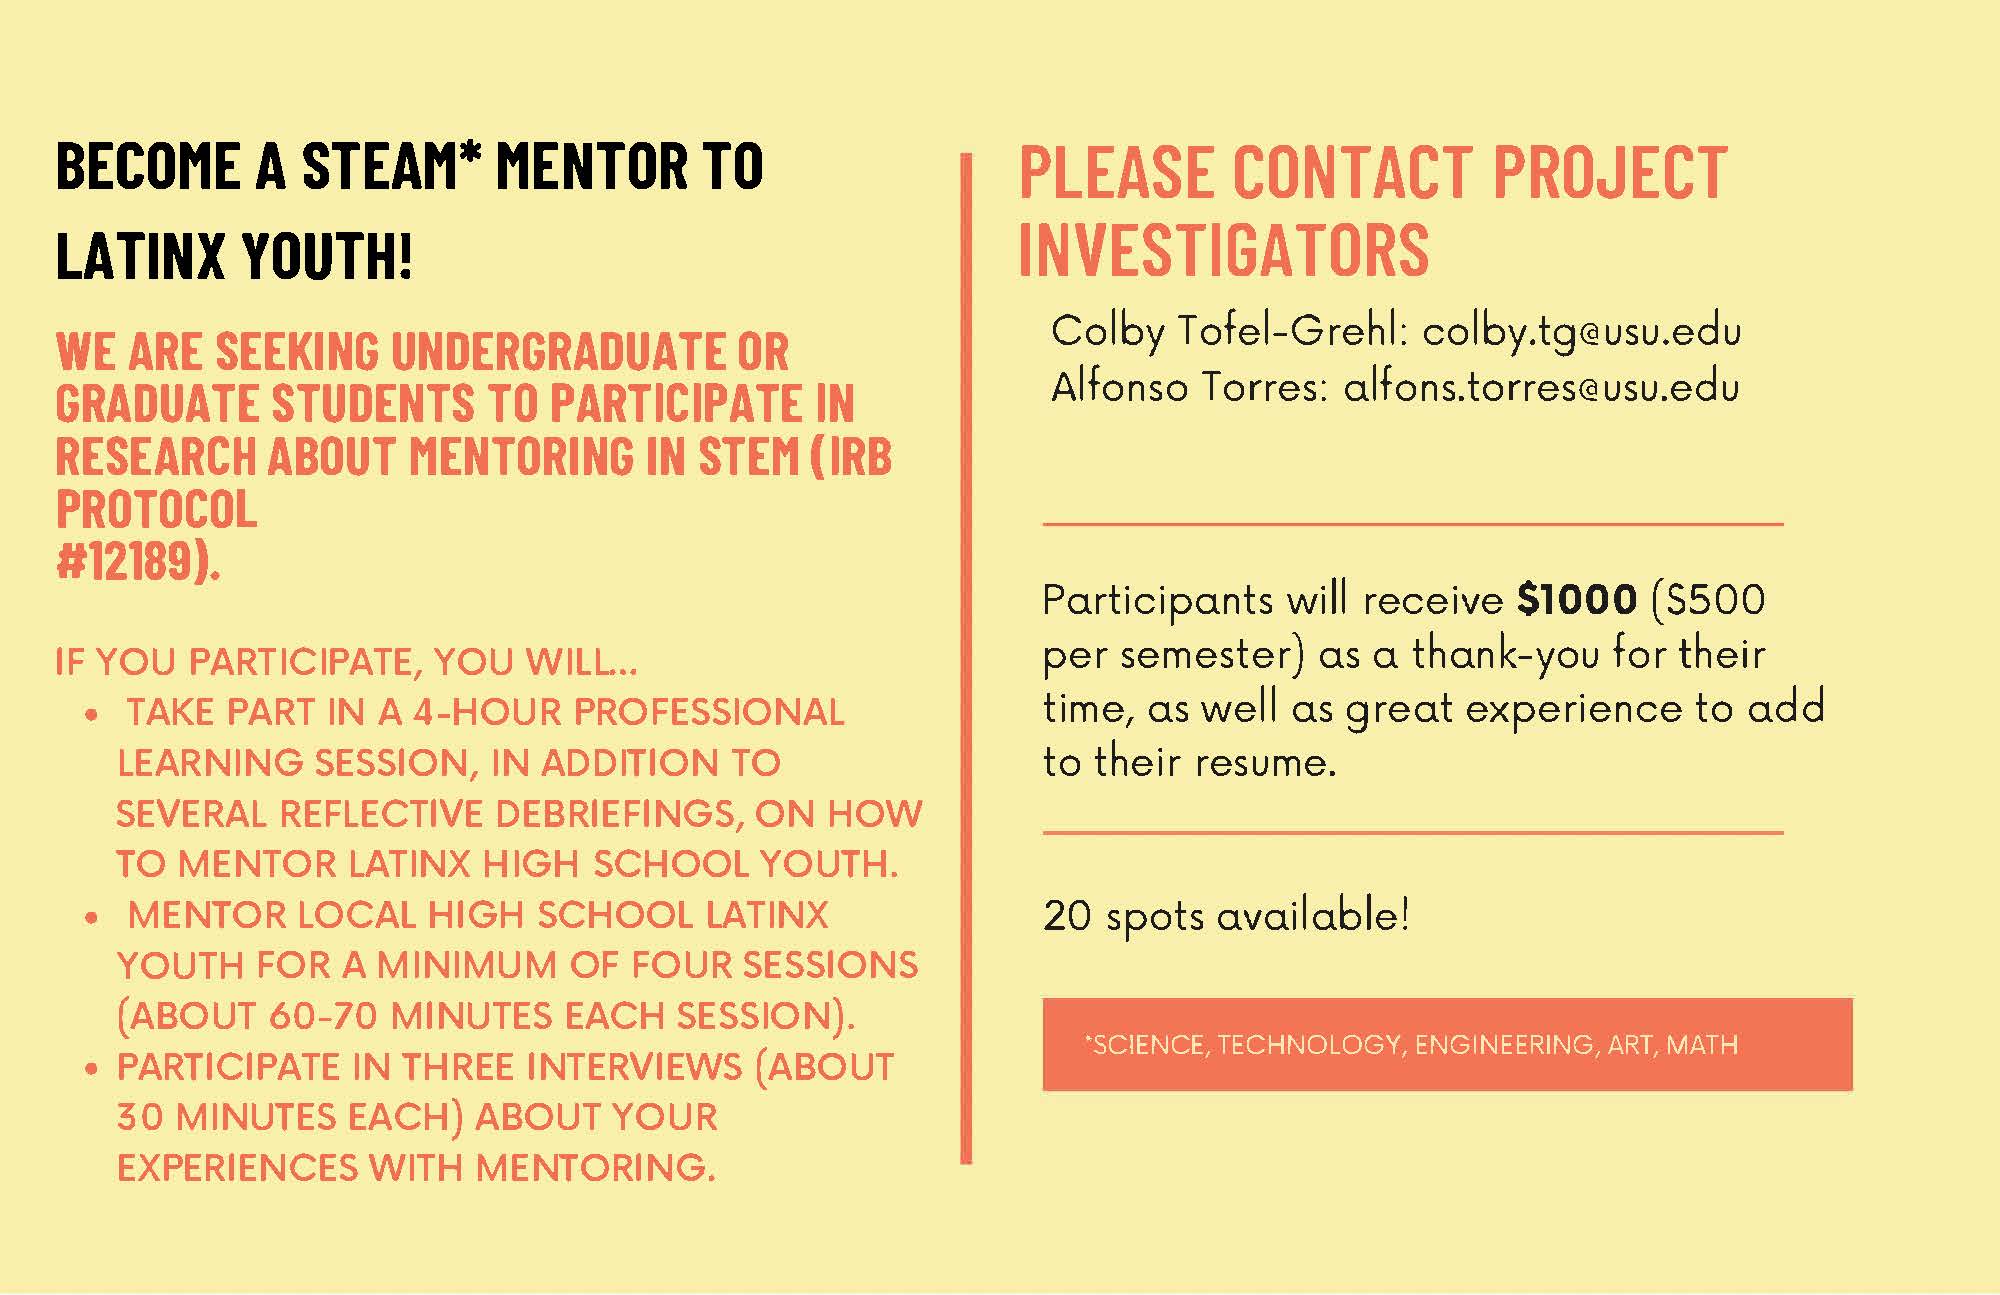 Recruitment flyer for mentors